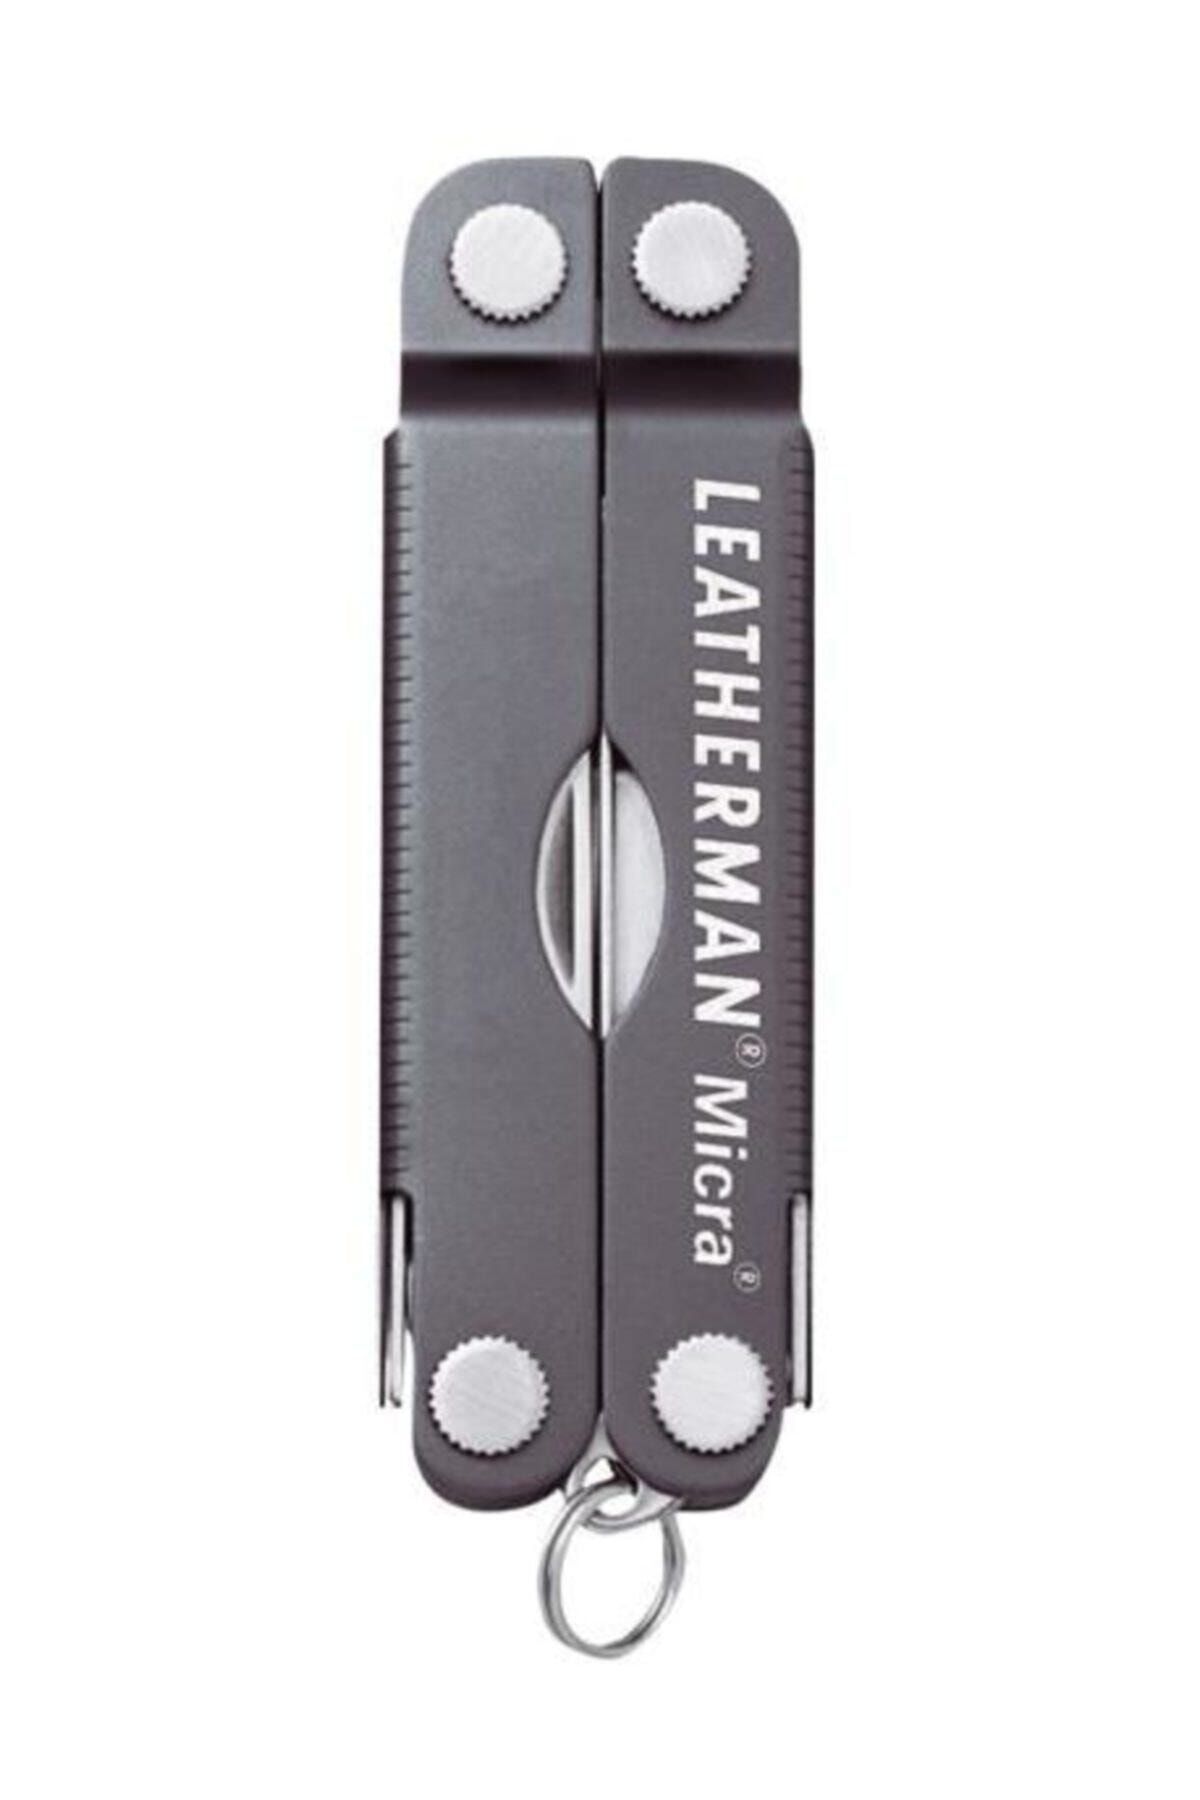 Leatherman Micra Gri Tool Lea64380181n